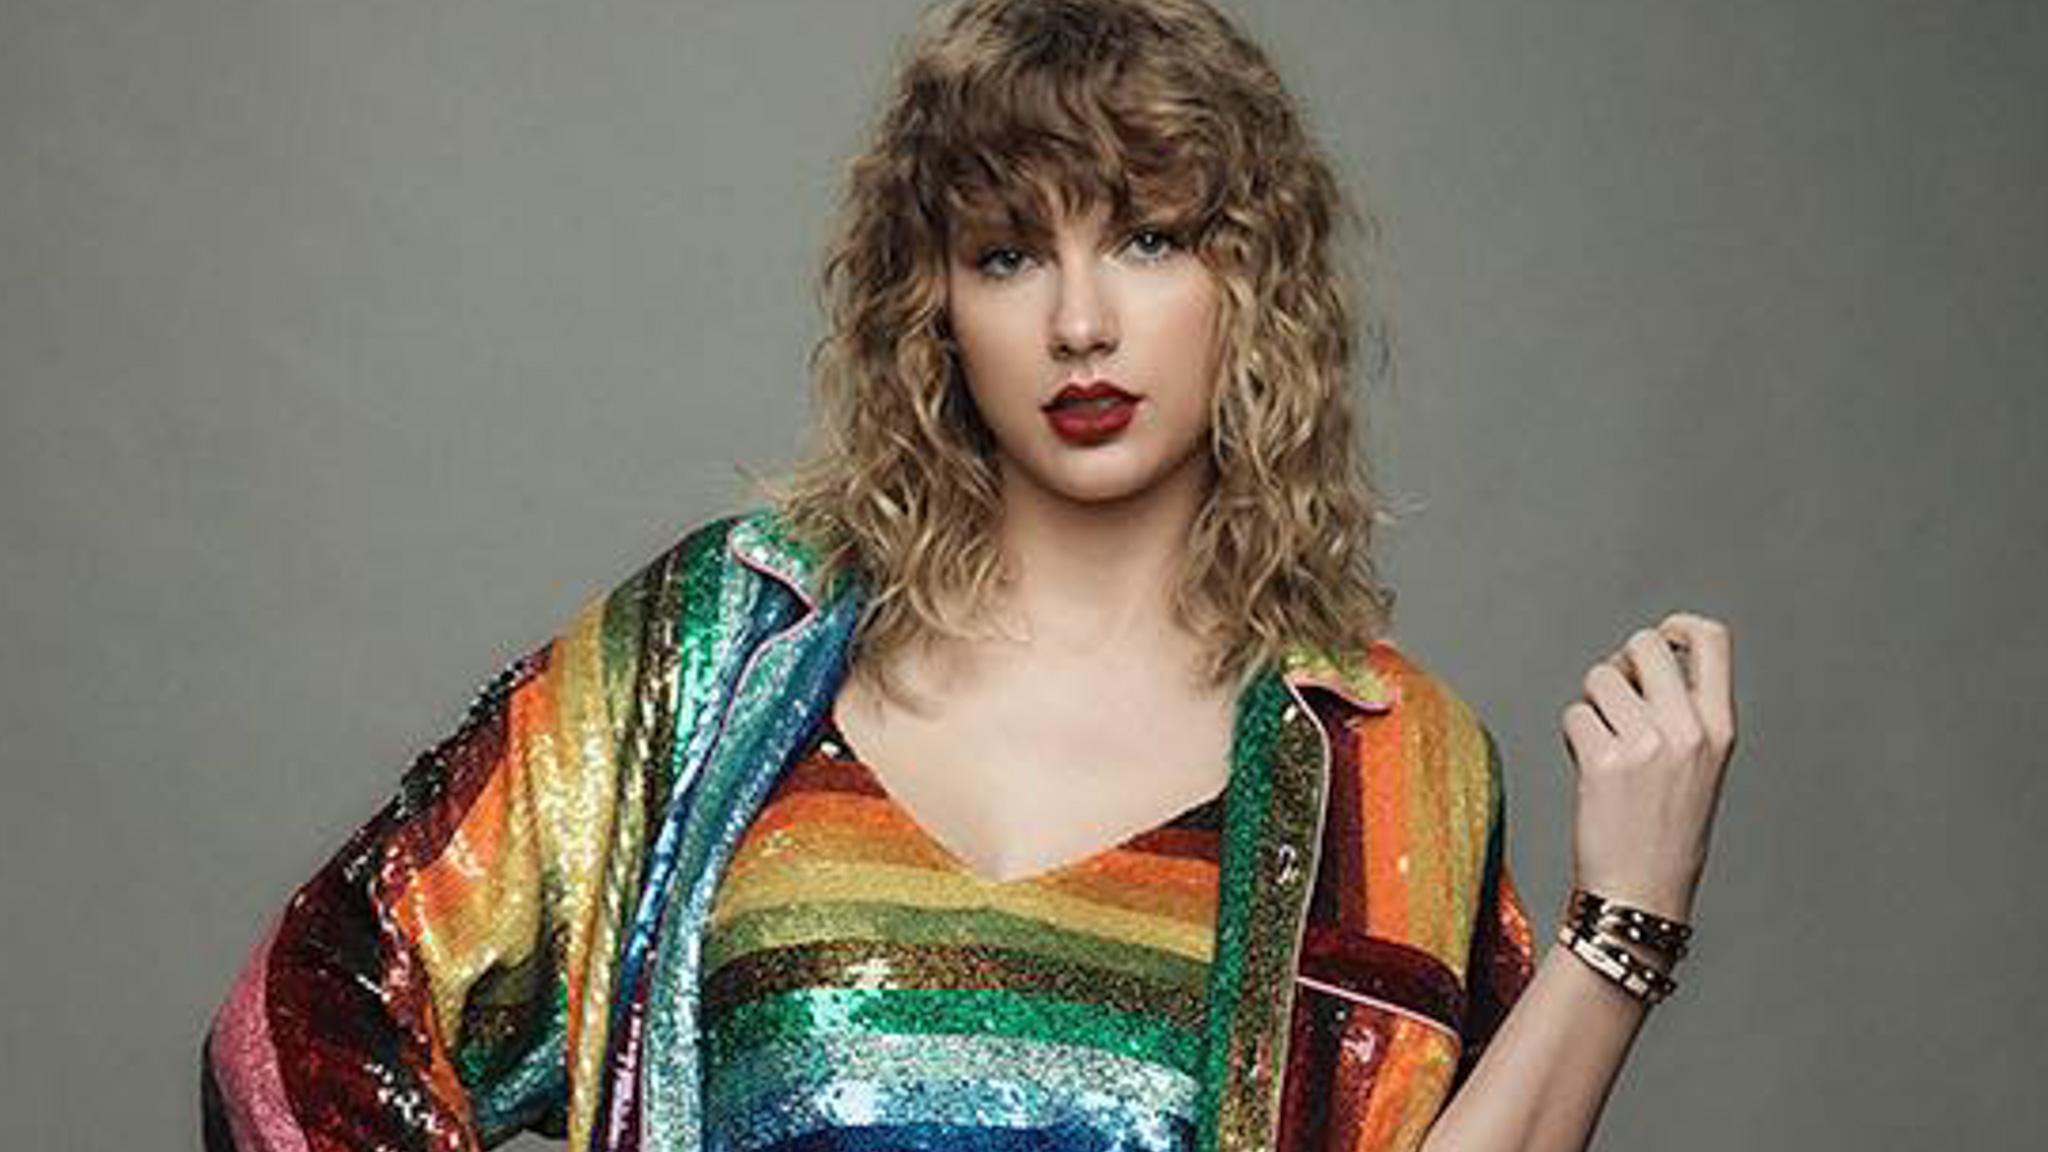 Taylor Swift releases new album, 'Reputation'2048 x 1152